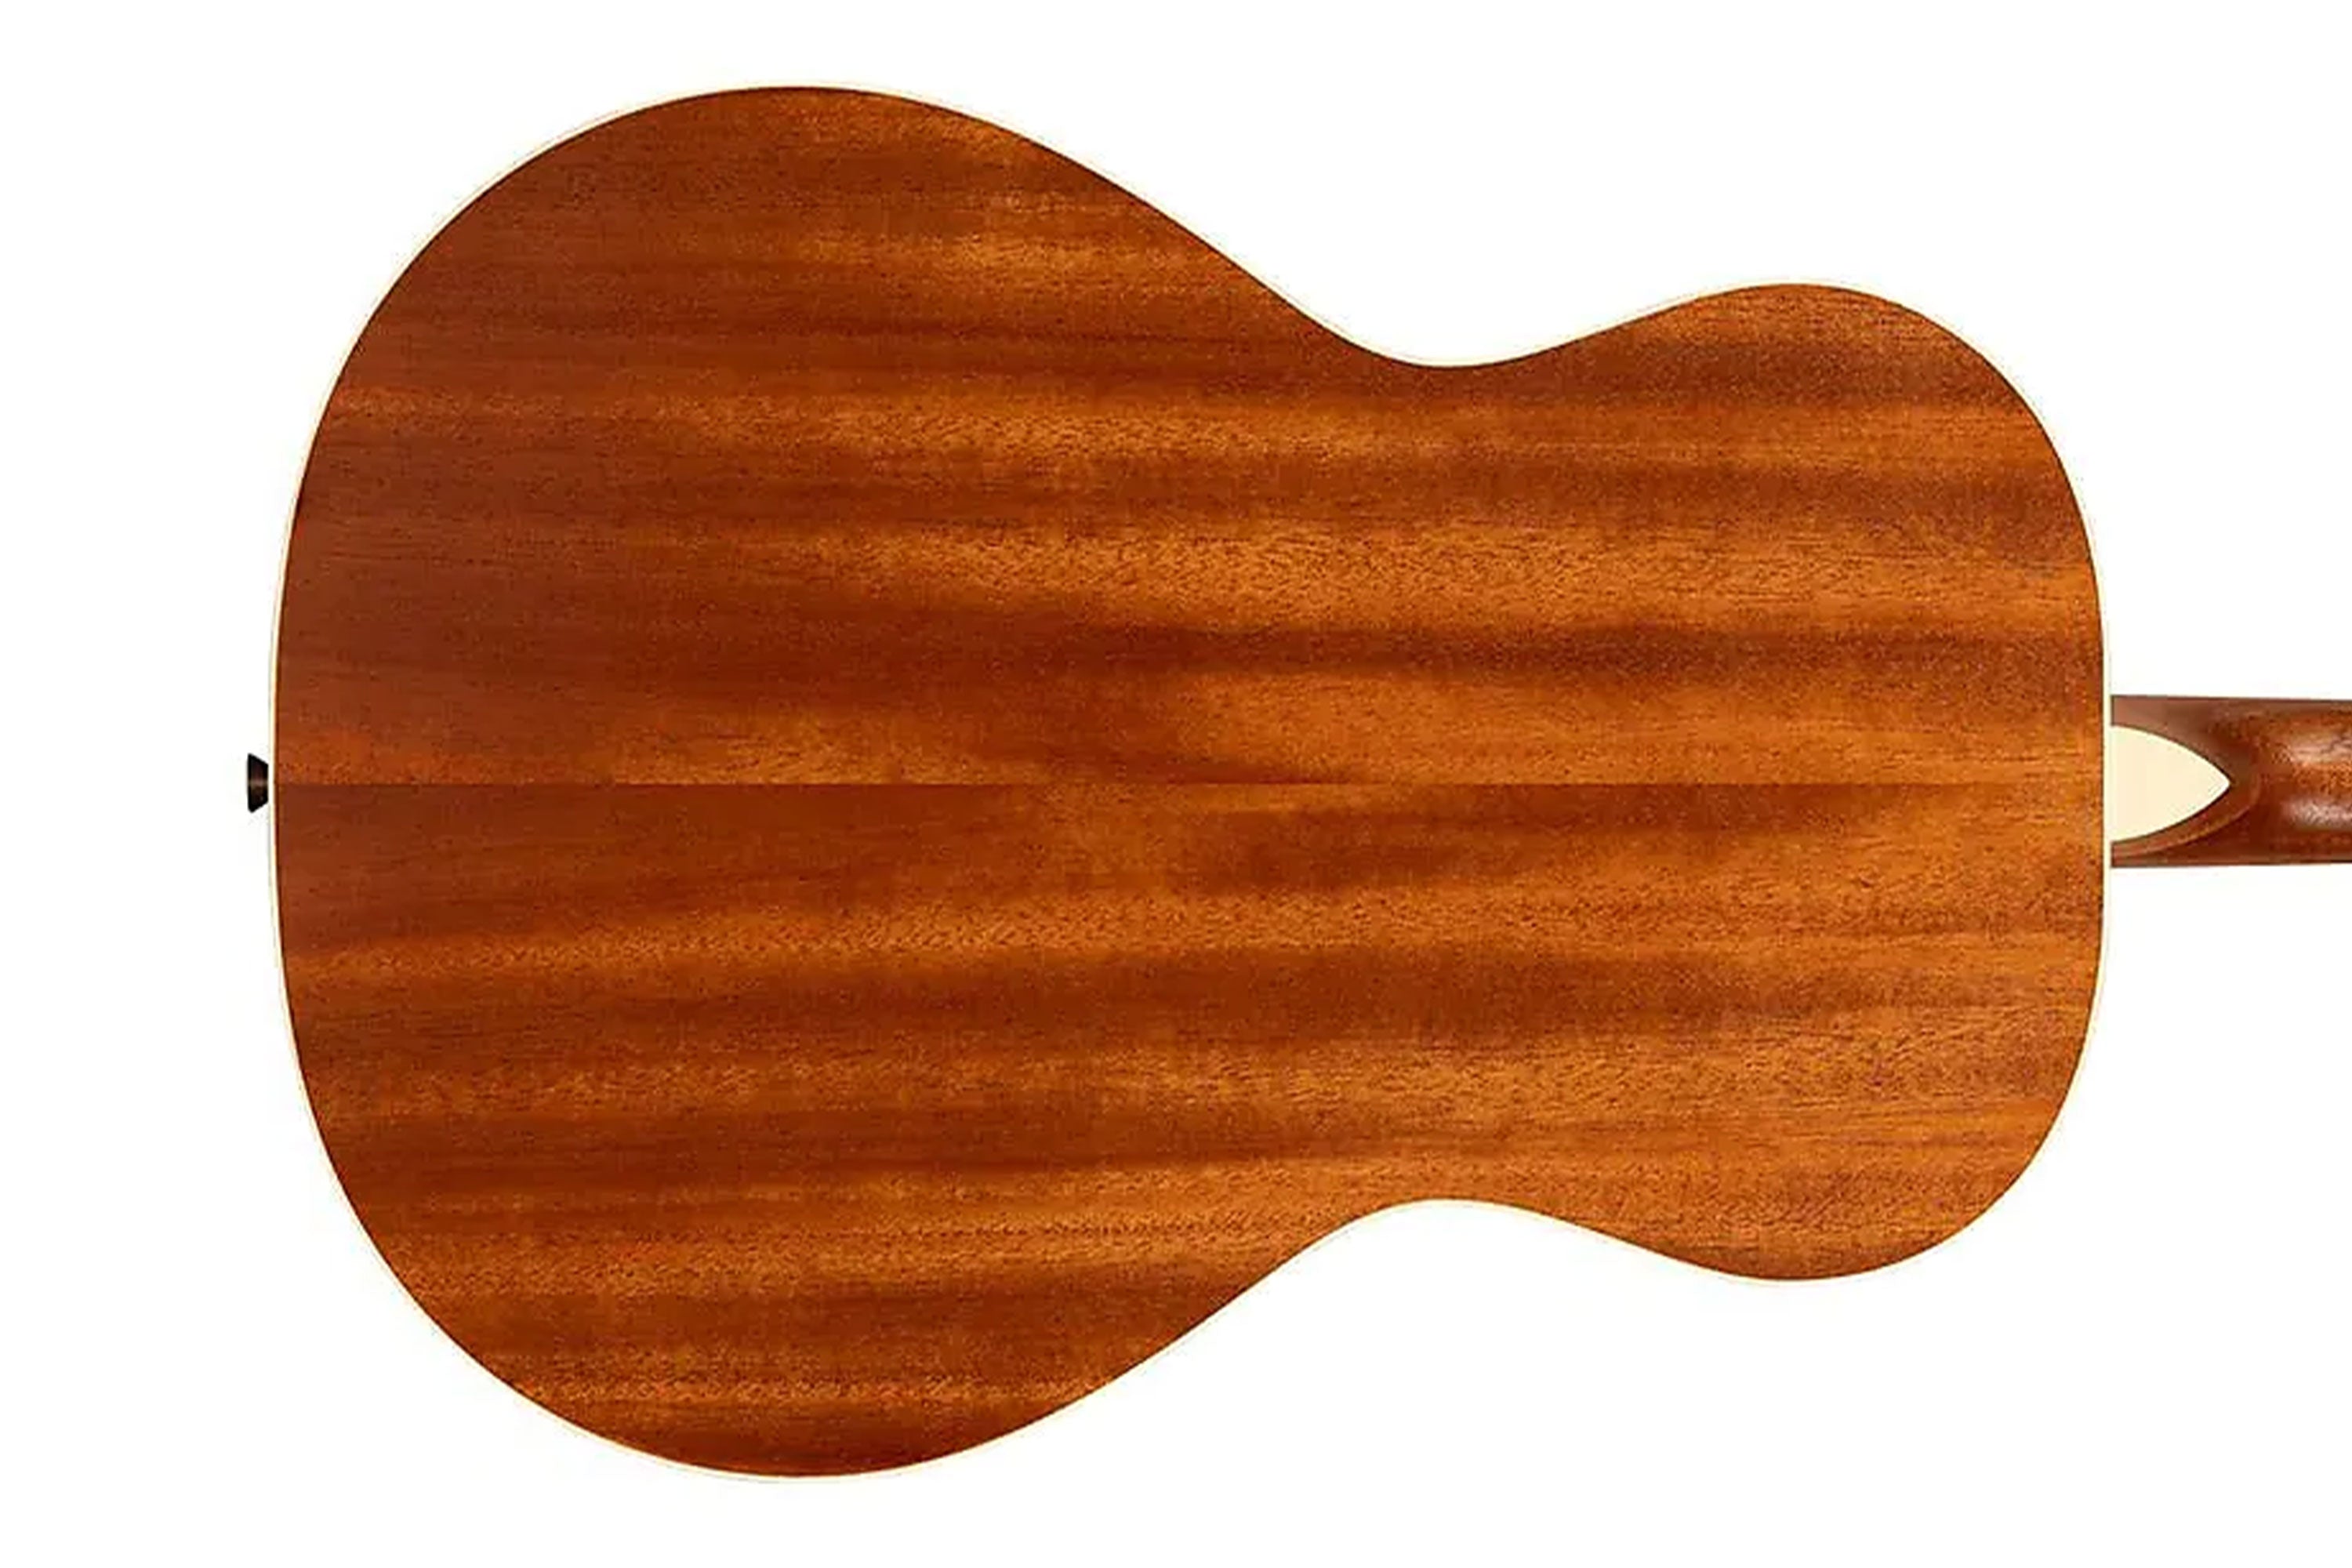 Kala Solid Mahogany Top Sunburst Tenor Guitar